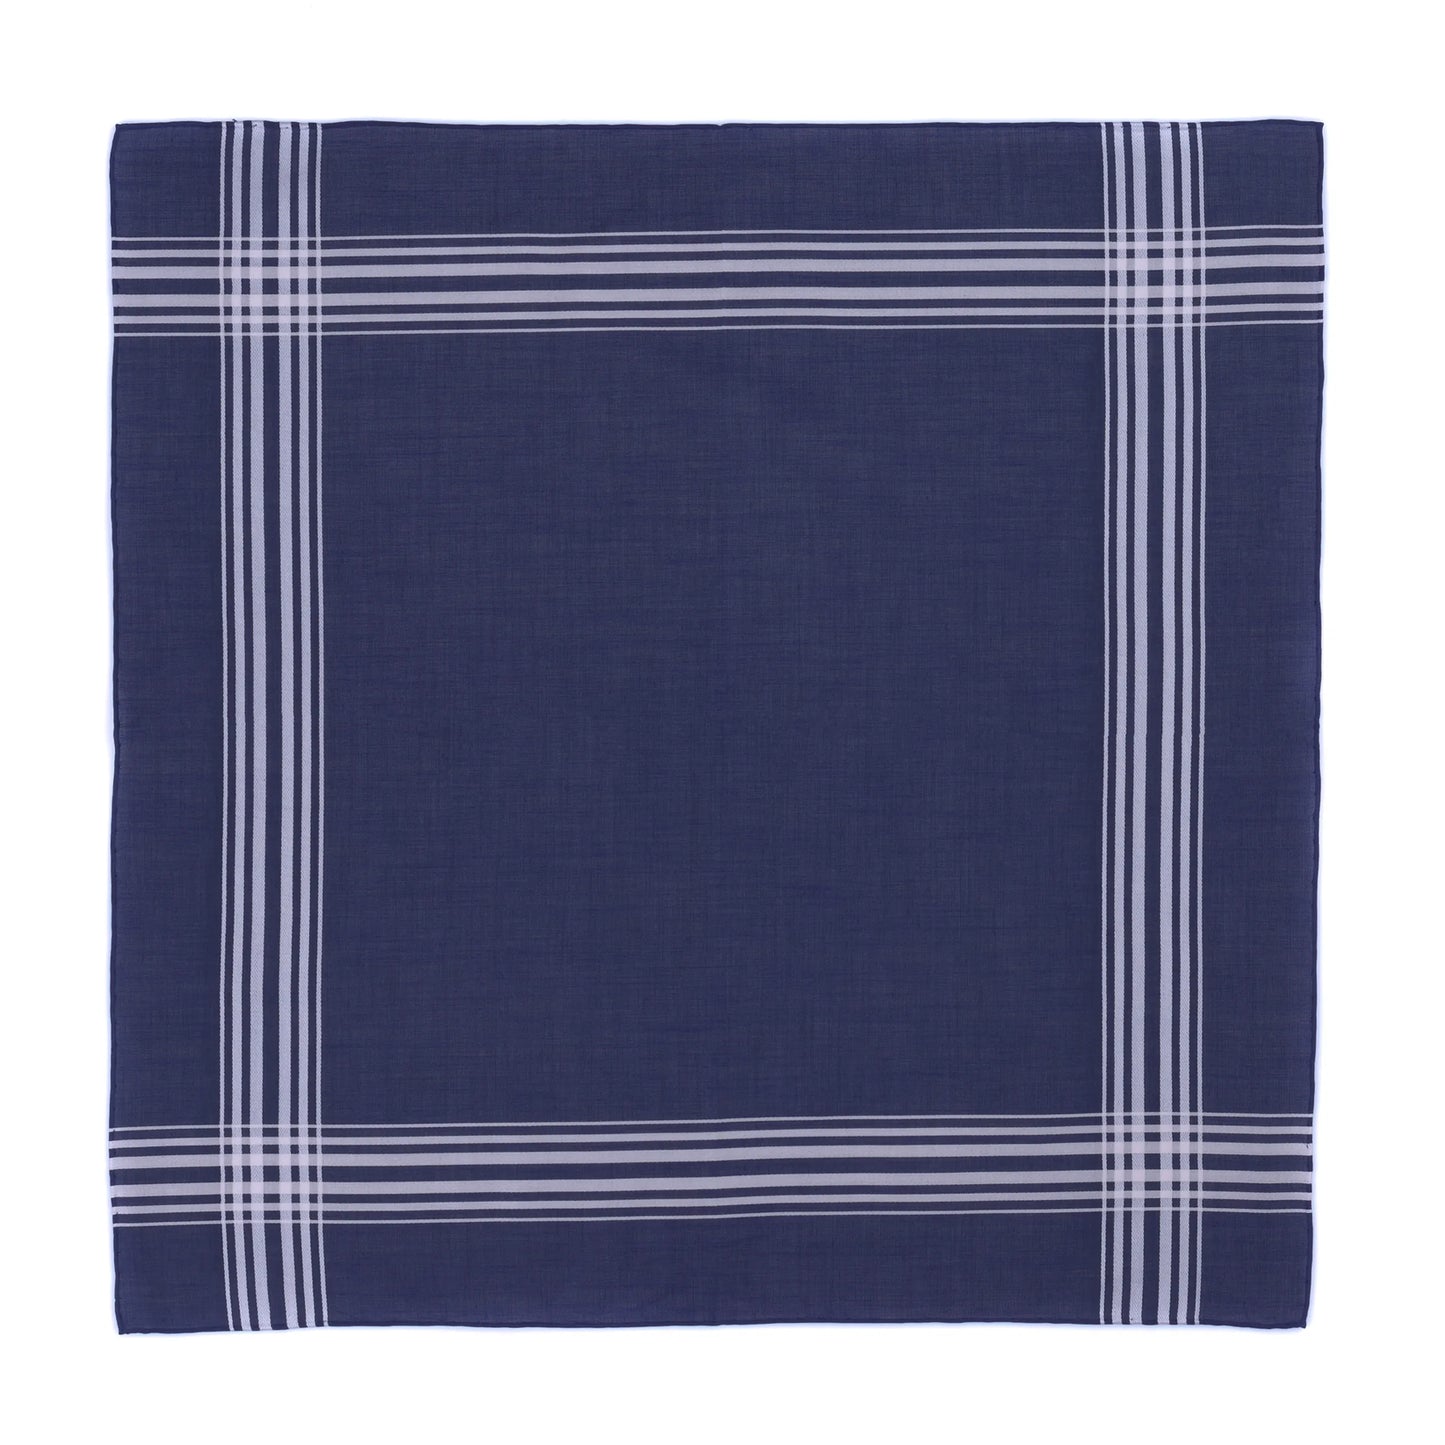 Cotton Pocket Square in Dark Blue with White Stripes